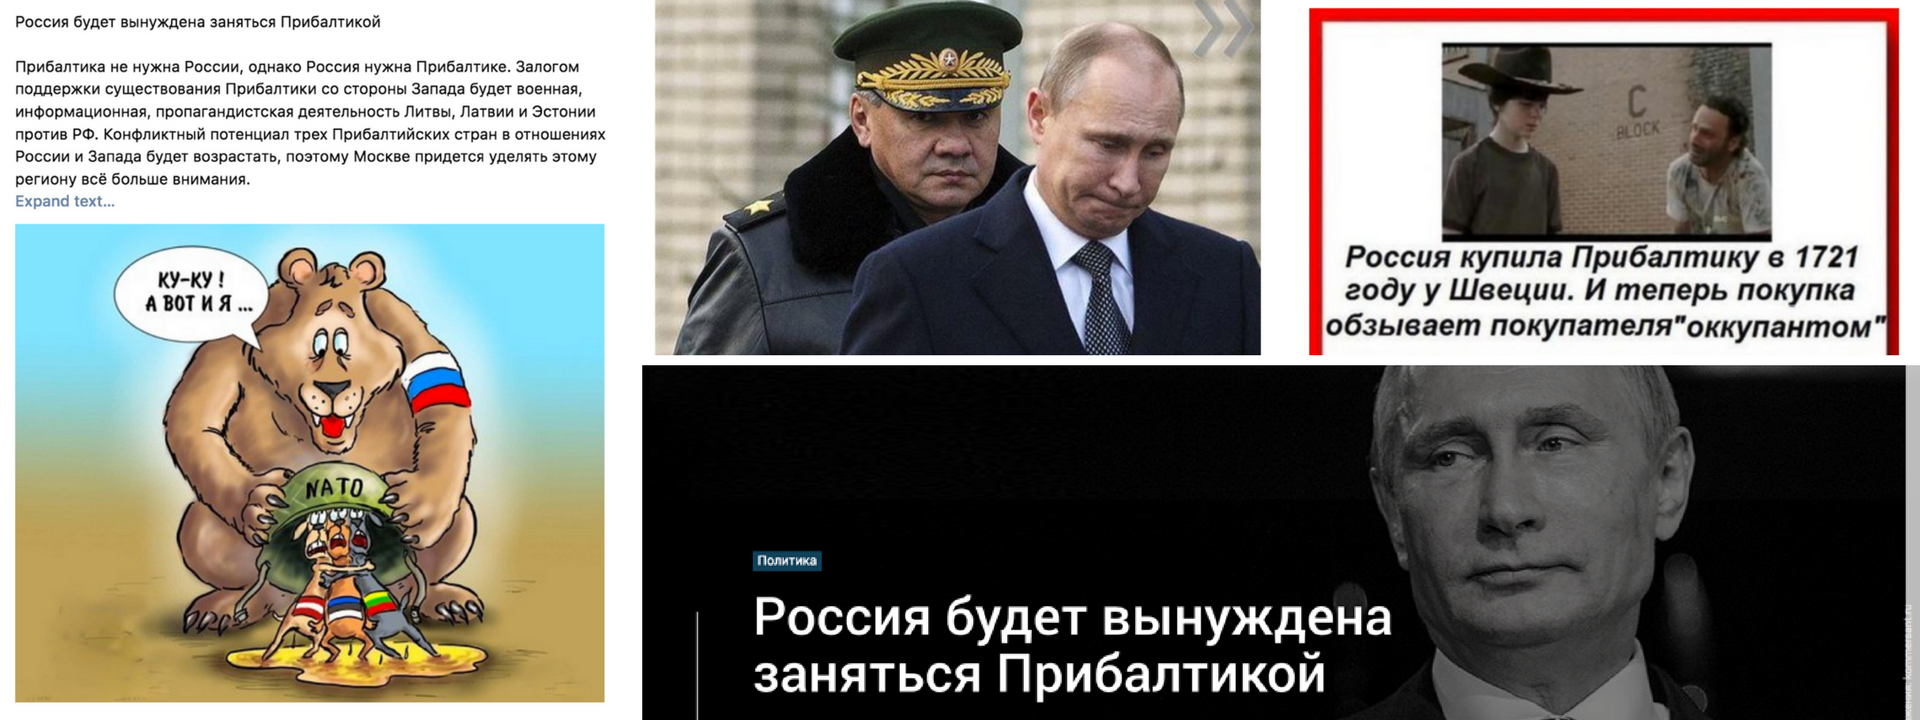 #BalticBrief: Propaganda Threatens Russian Engagement…Militarily